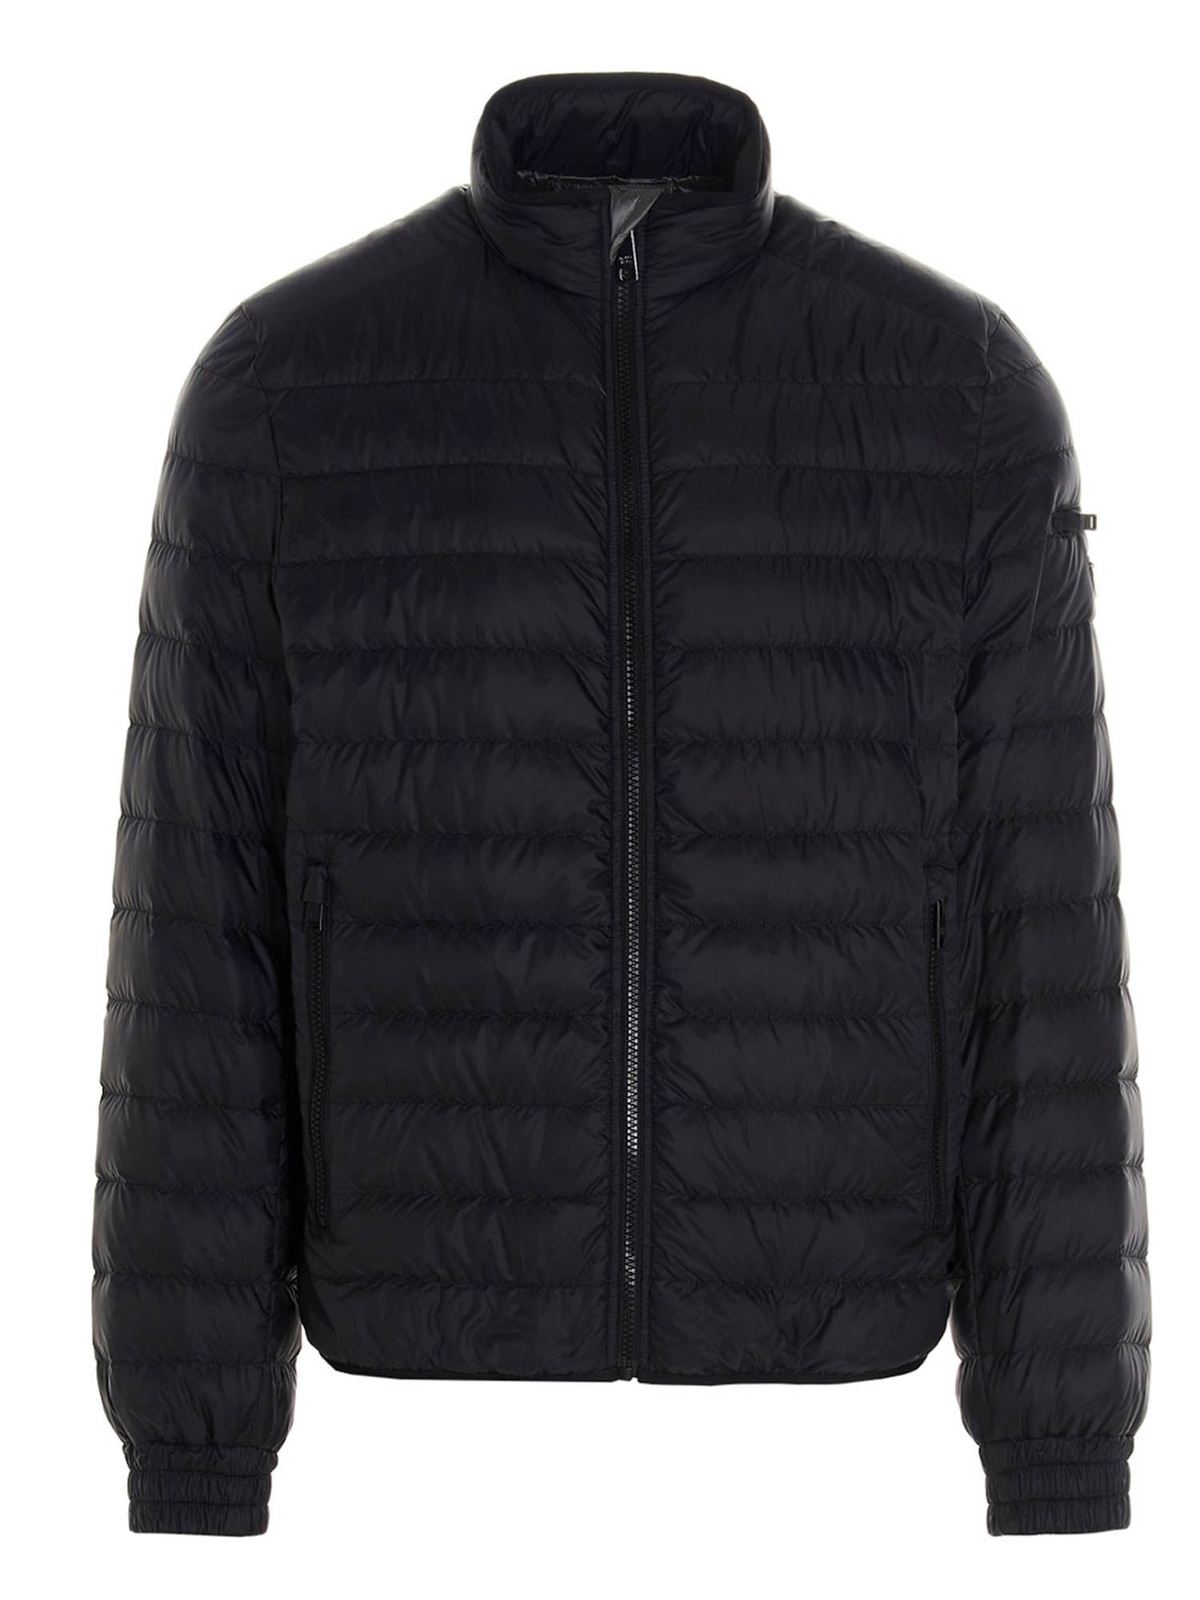 Prada - Technical eggshell jacket in black - padded coats - SGN9571YNSF0A64